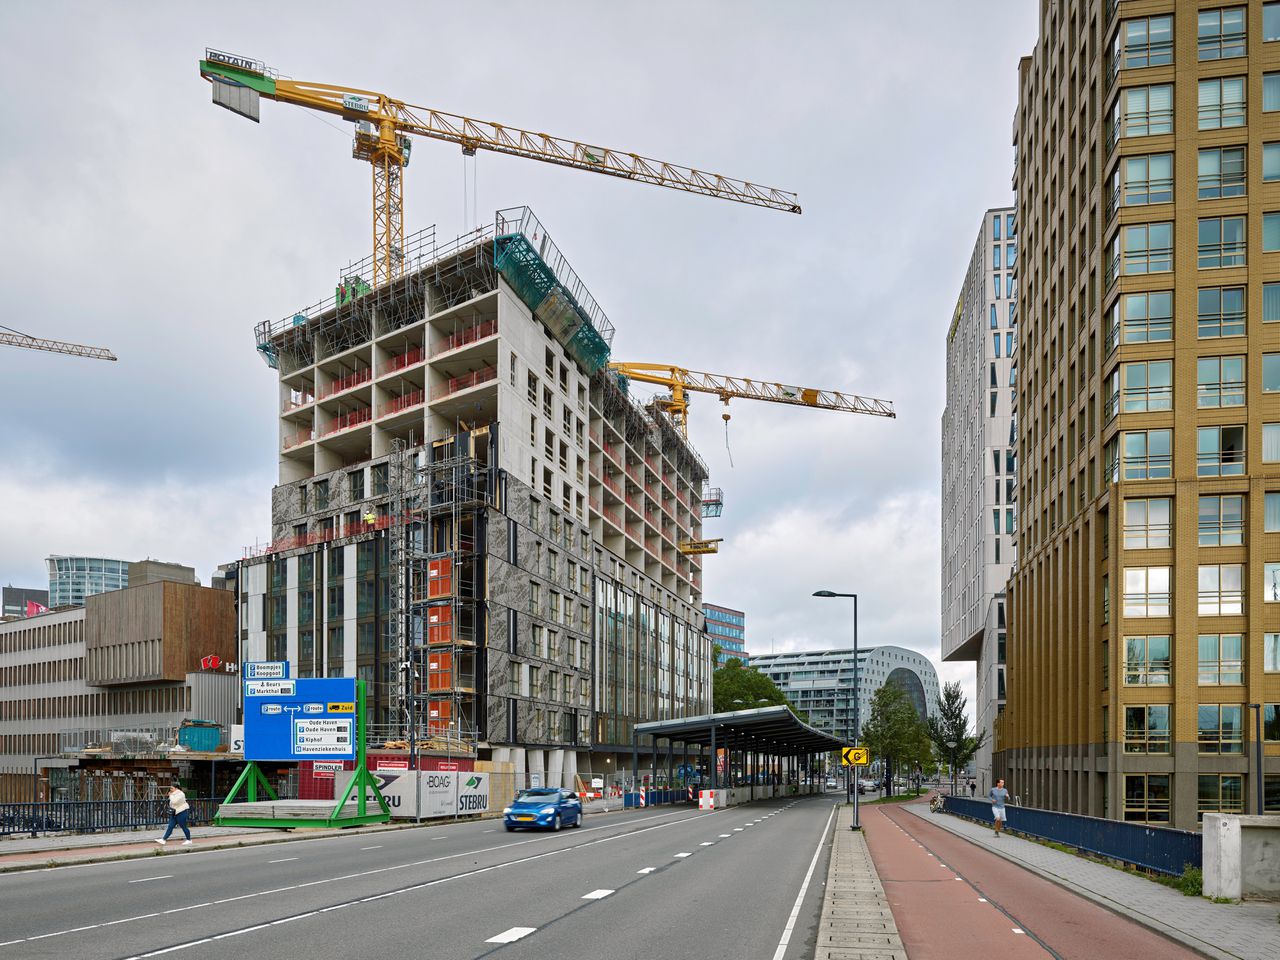 Woningbouwproject, Rotterdam Wijnhaven, in 2020.